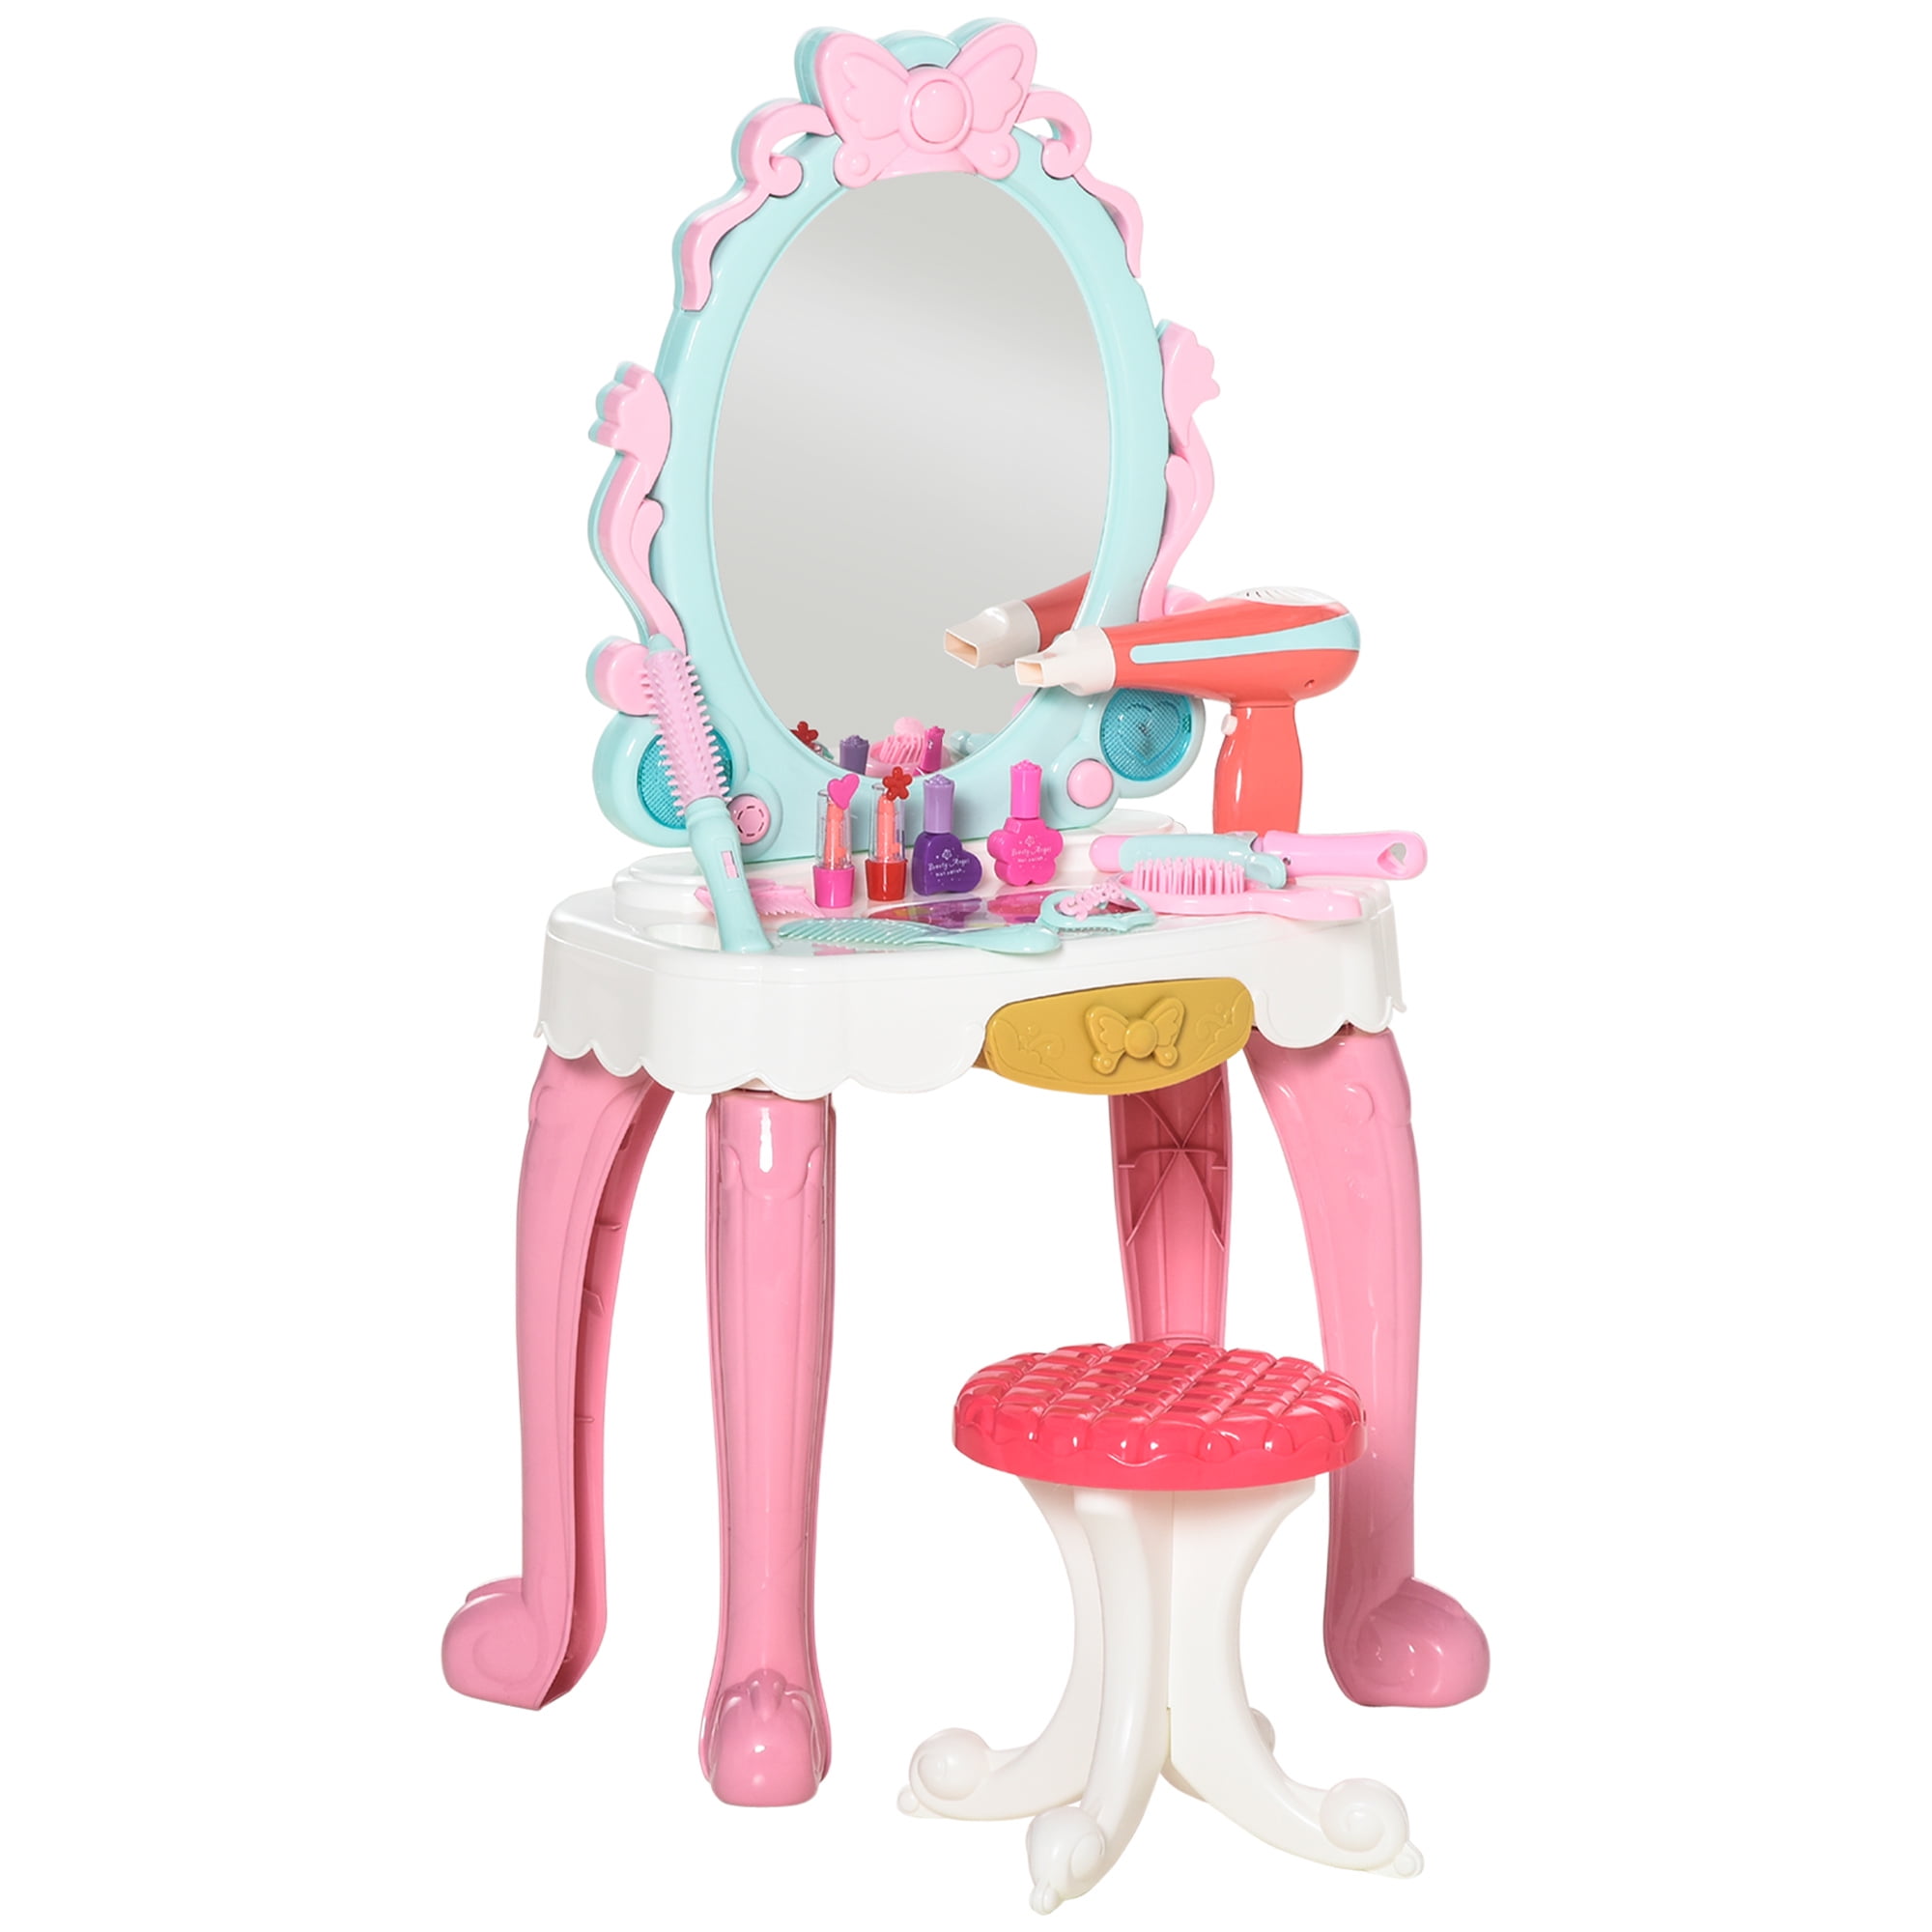 Step2 Fantasy Vanity Dressing Table for sale online 757900 